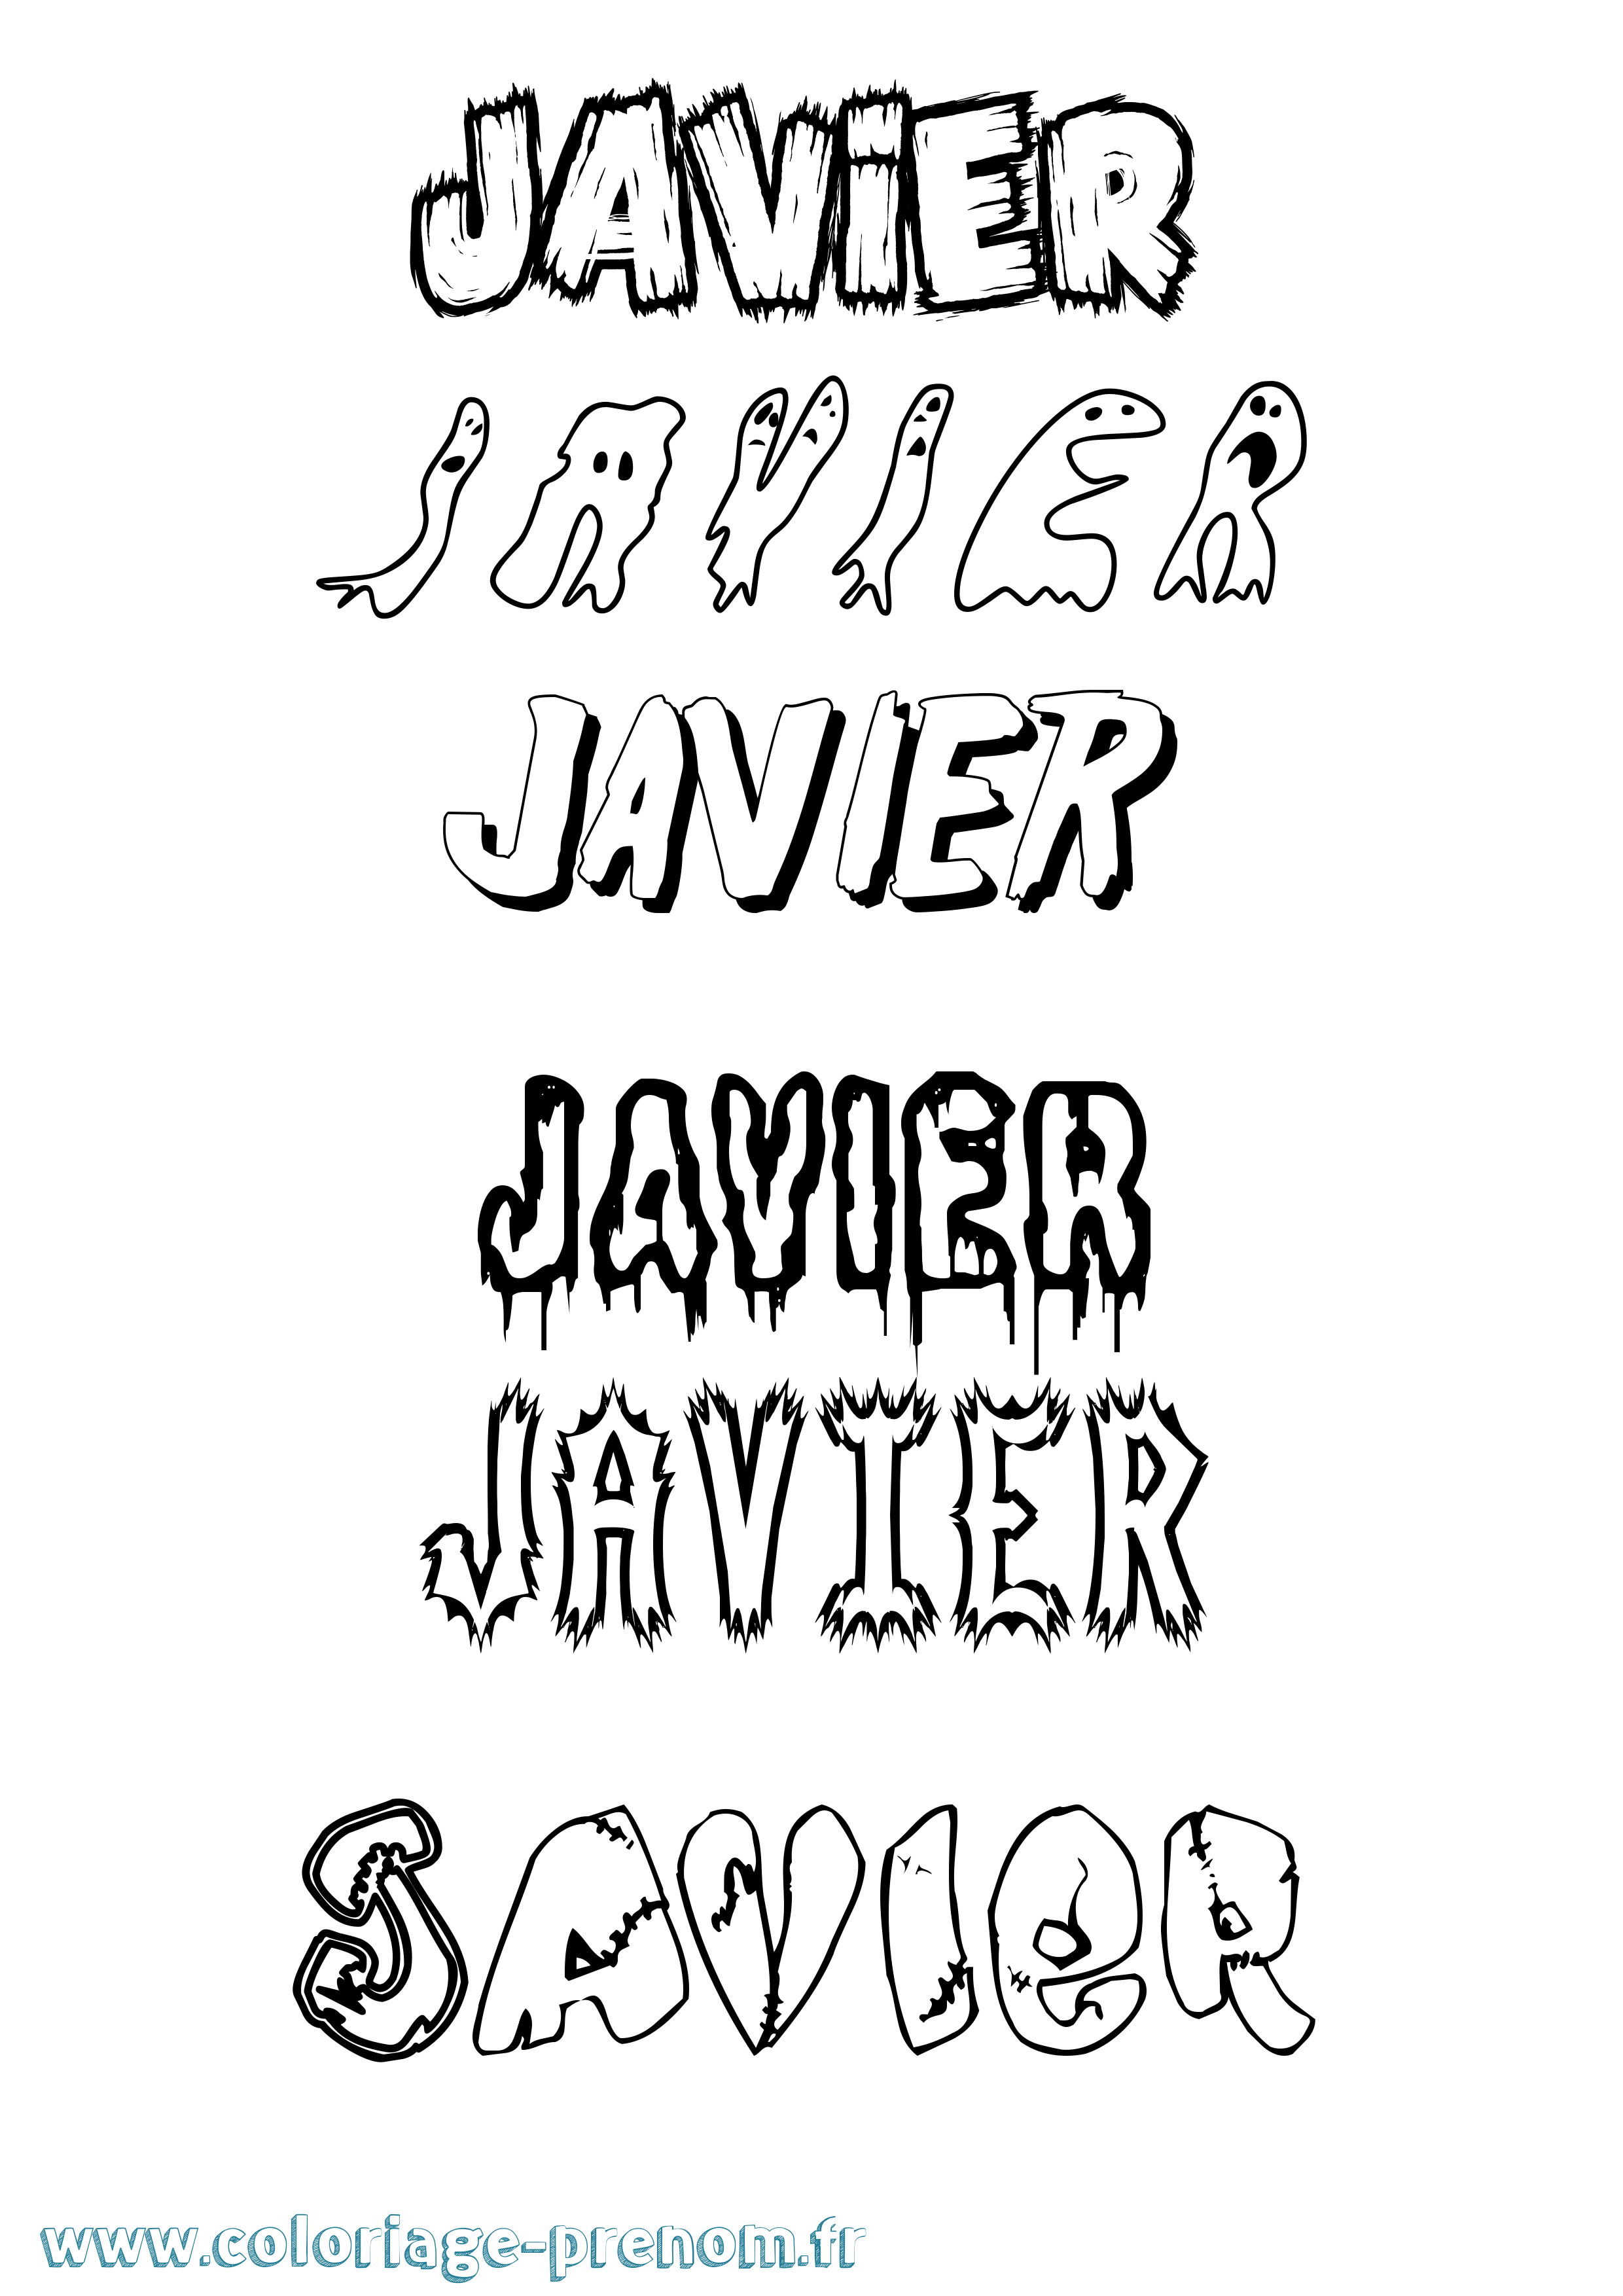 Coloriage prénom Javier Frisson